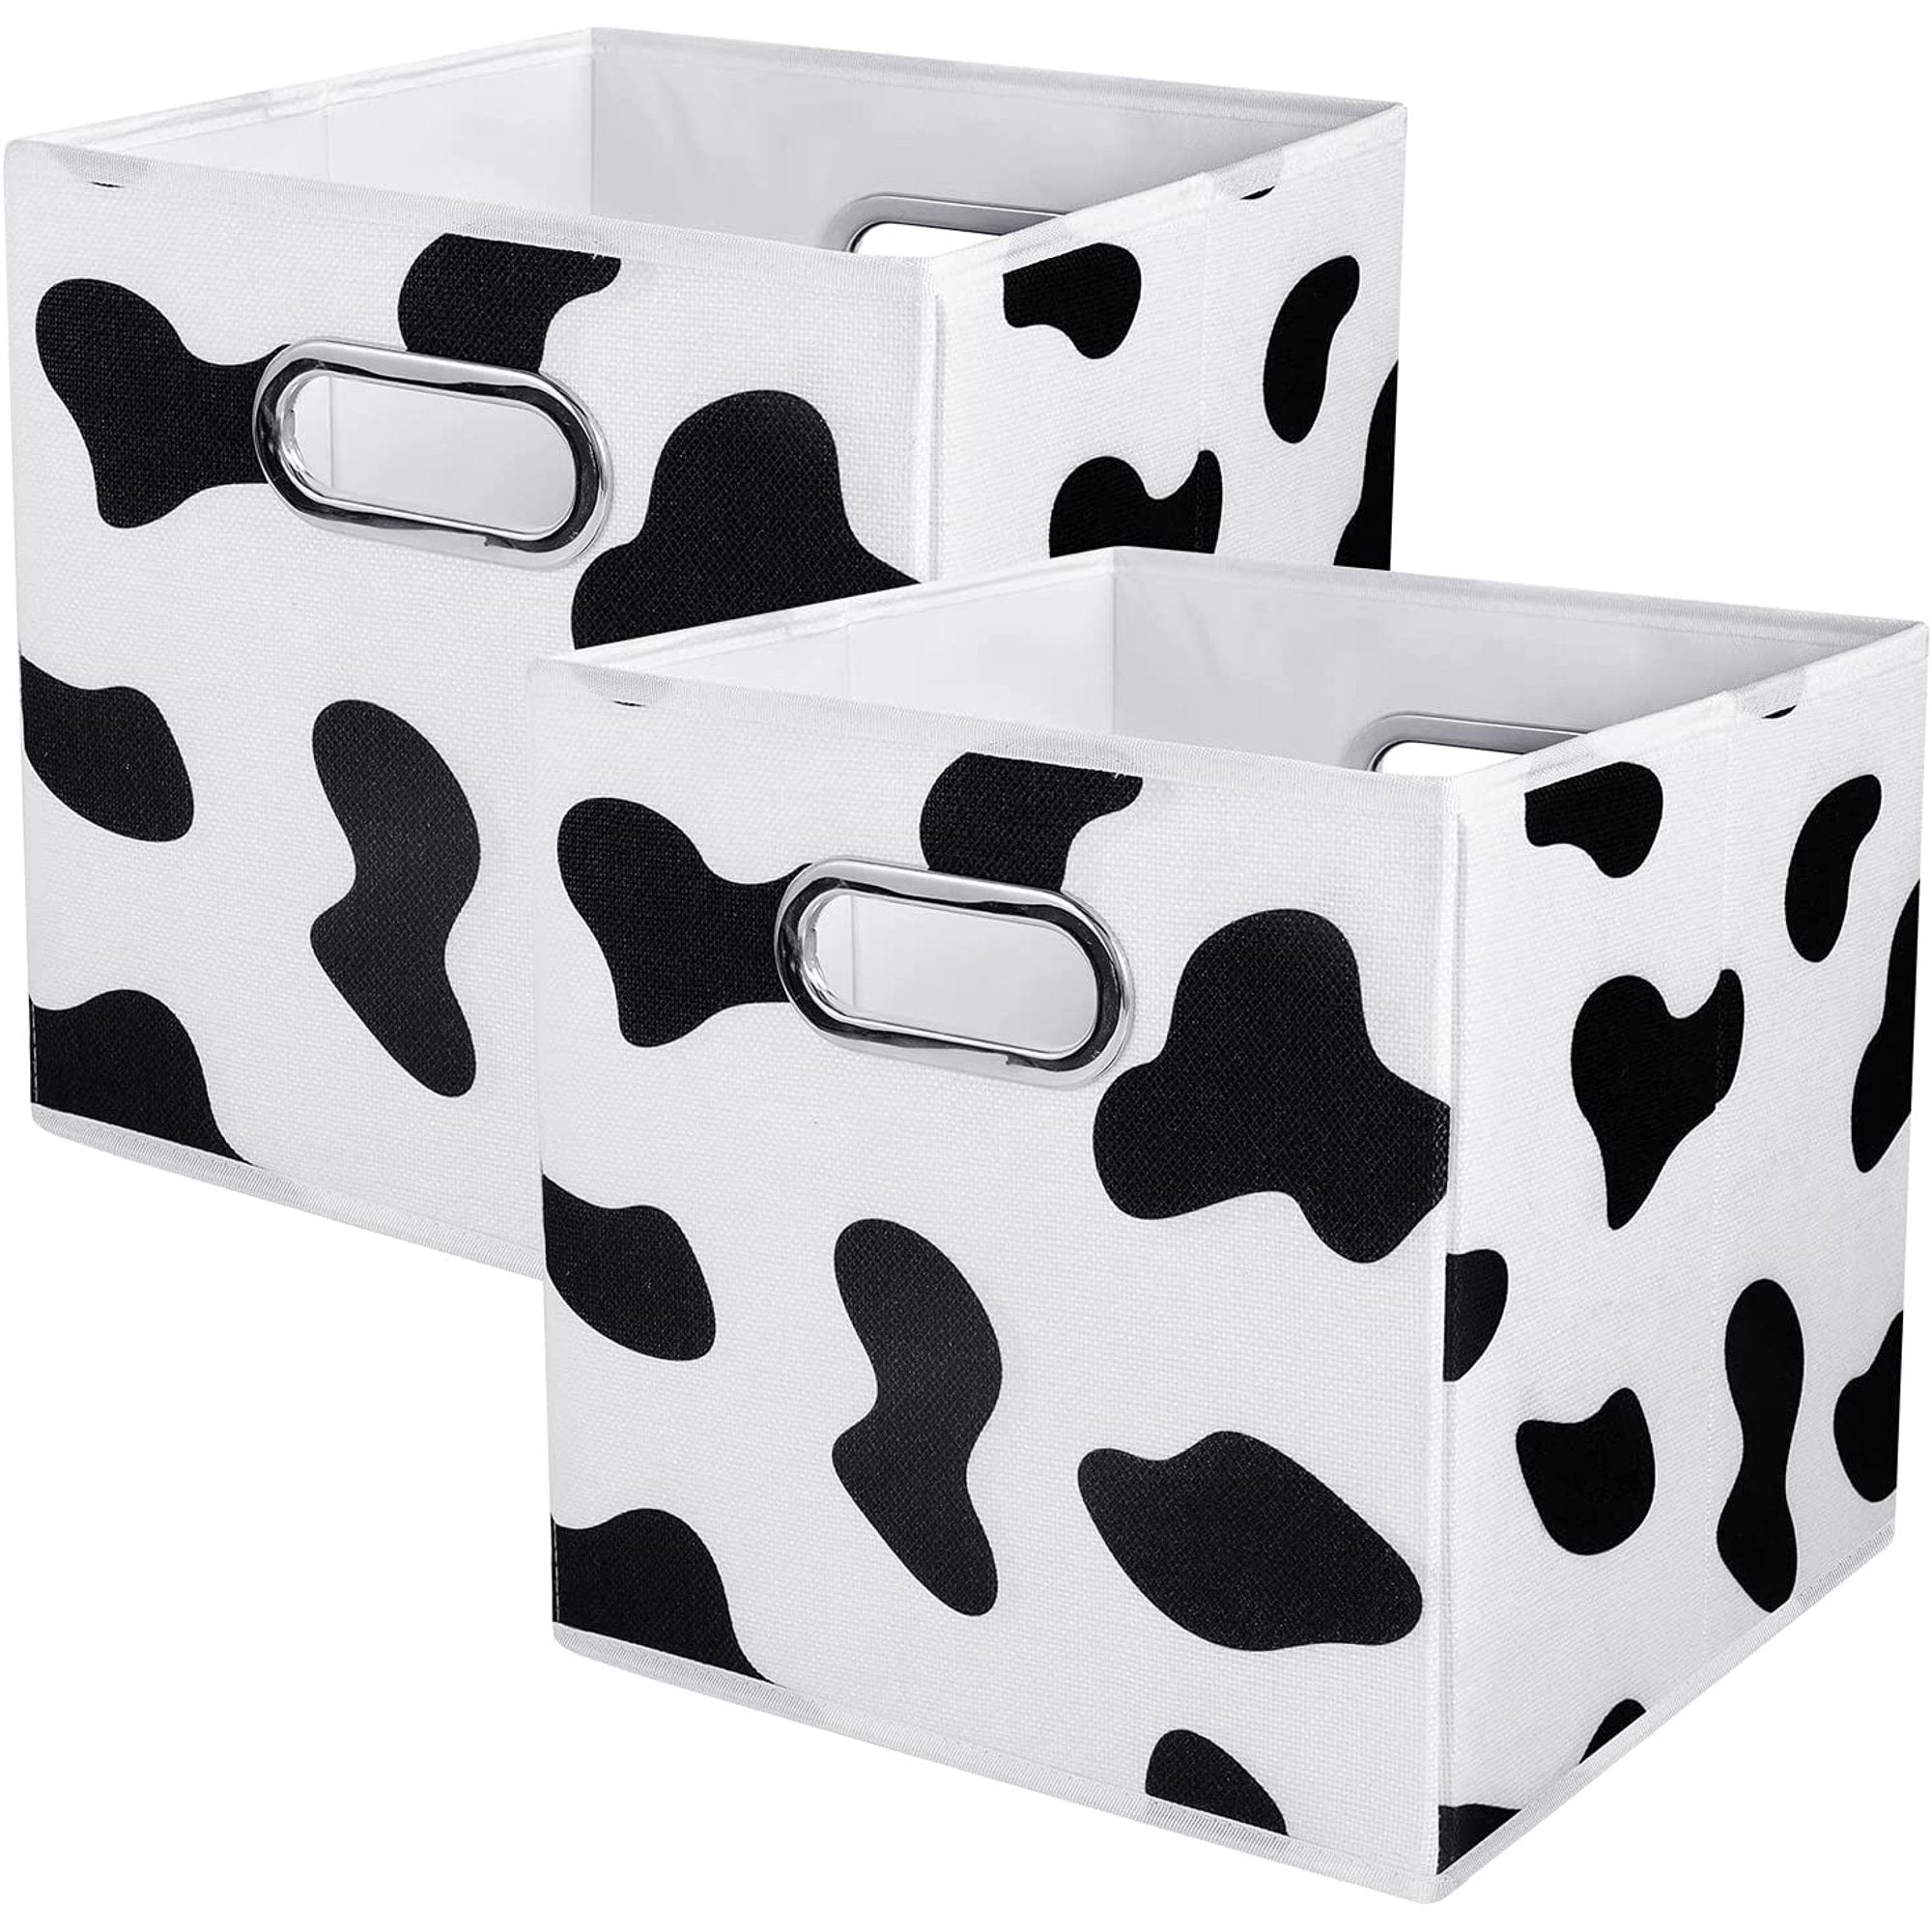 Storage Cubes Cow Print Large Cotton Linen Fabric Bins